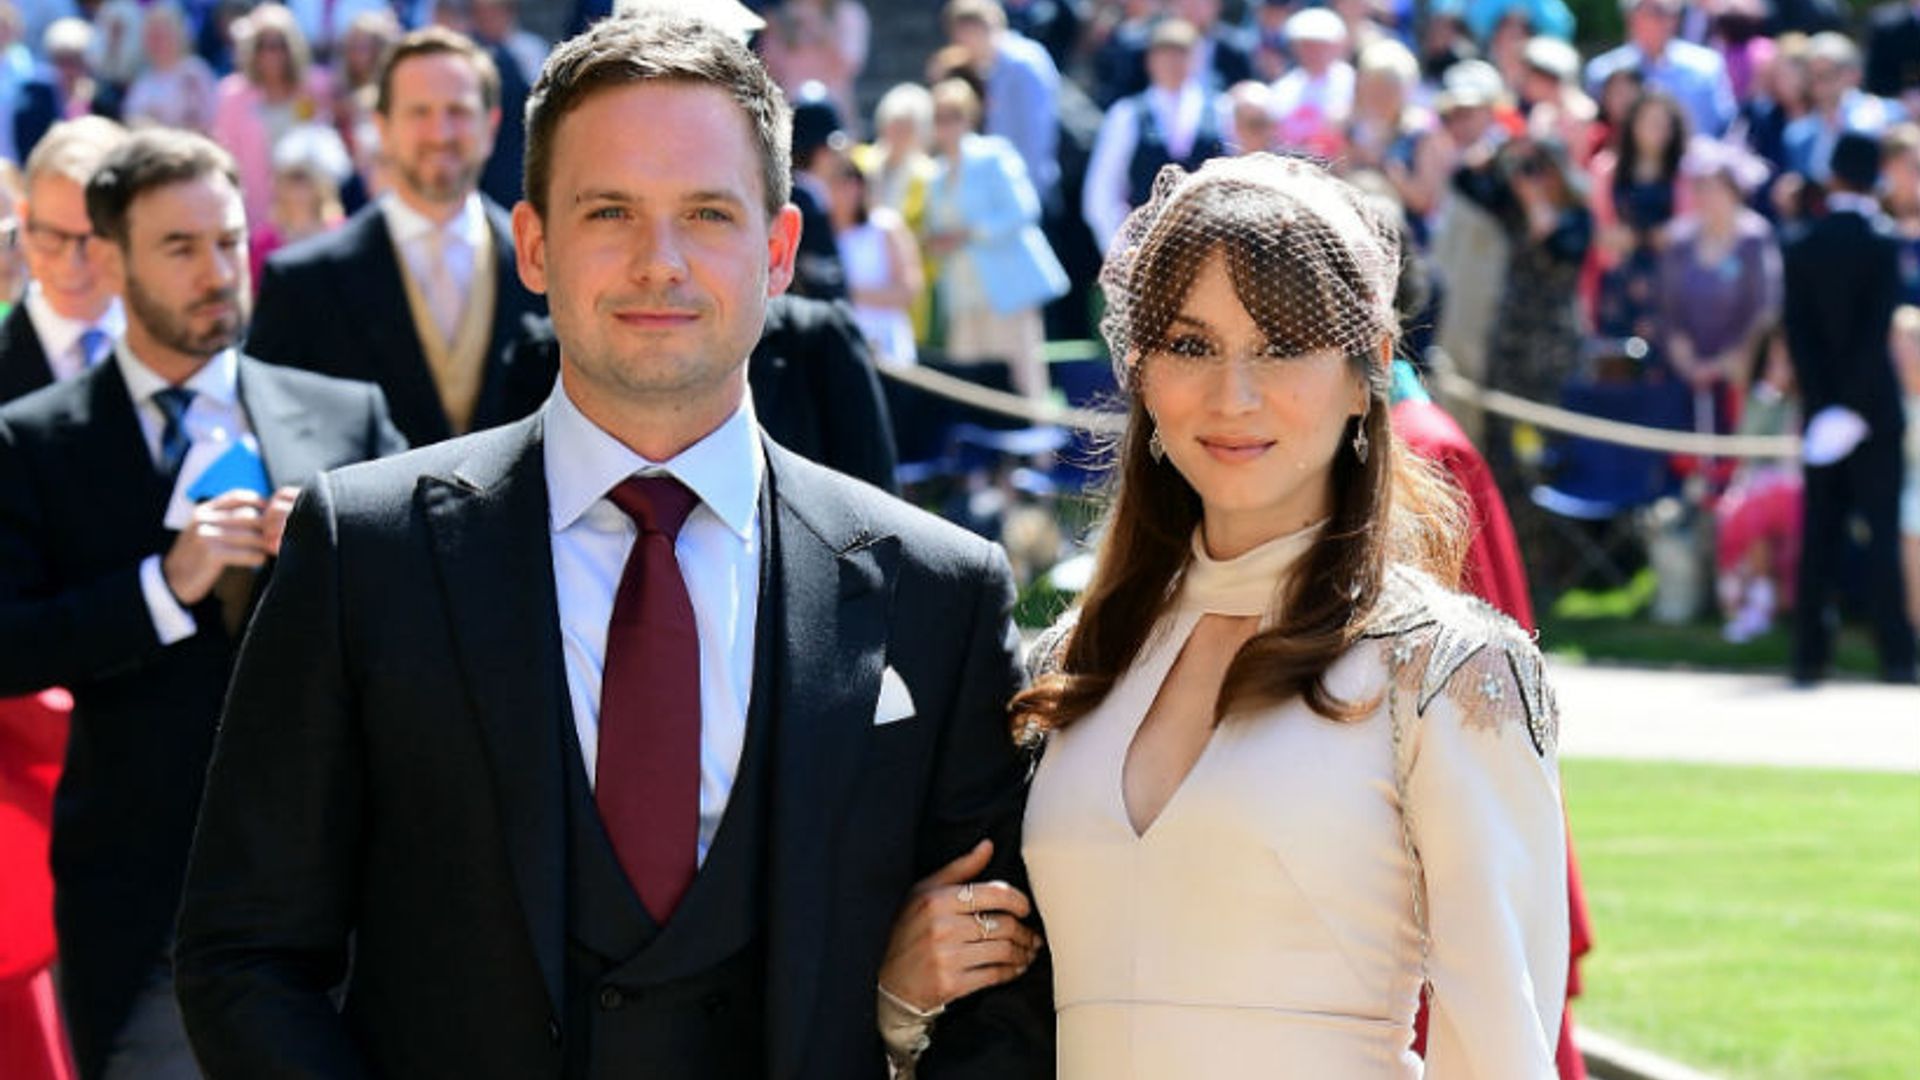 Patrick J. Adams and wife jet to Santorini after royal wedding